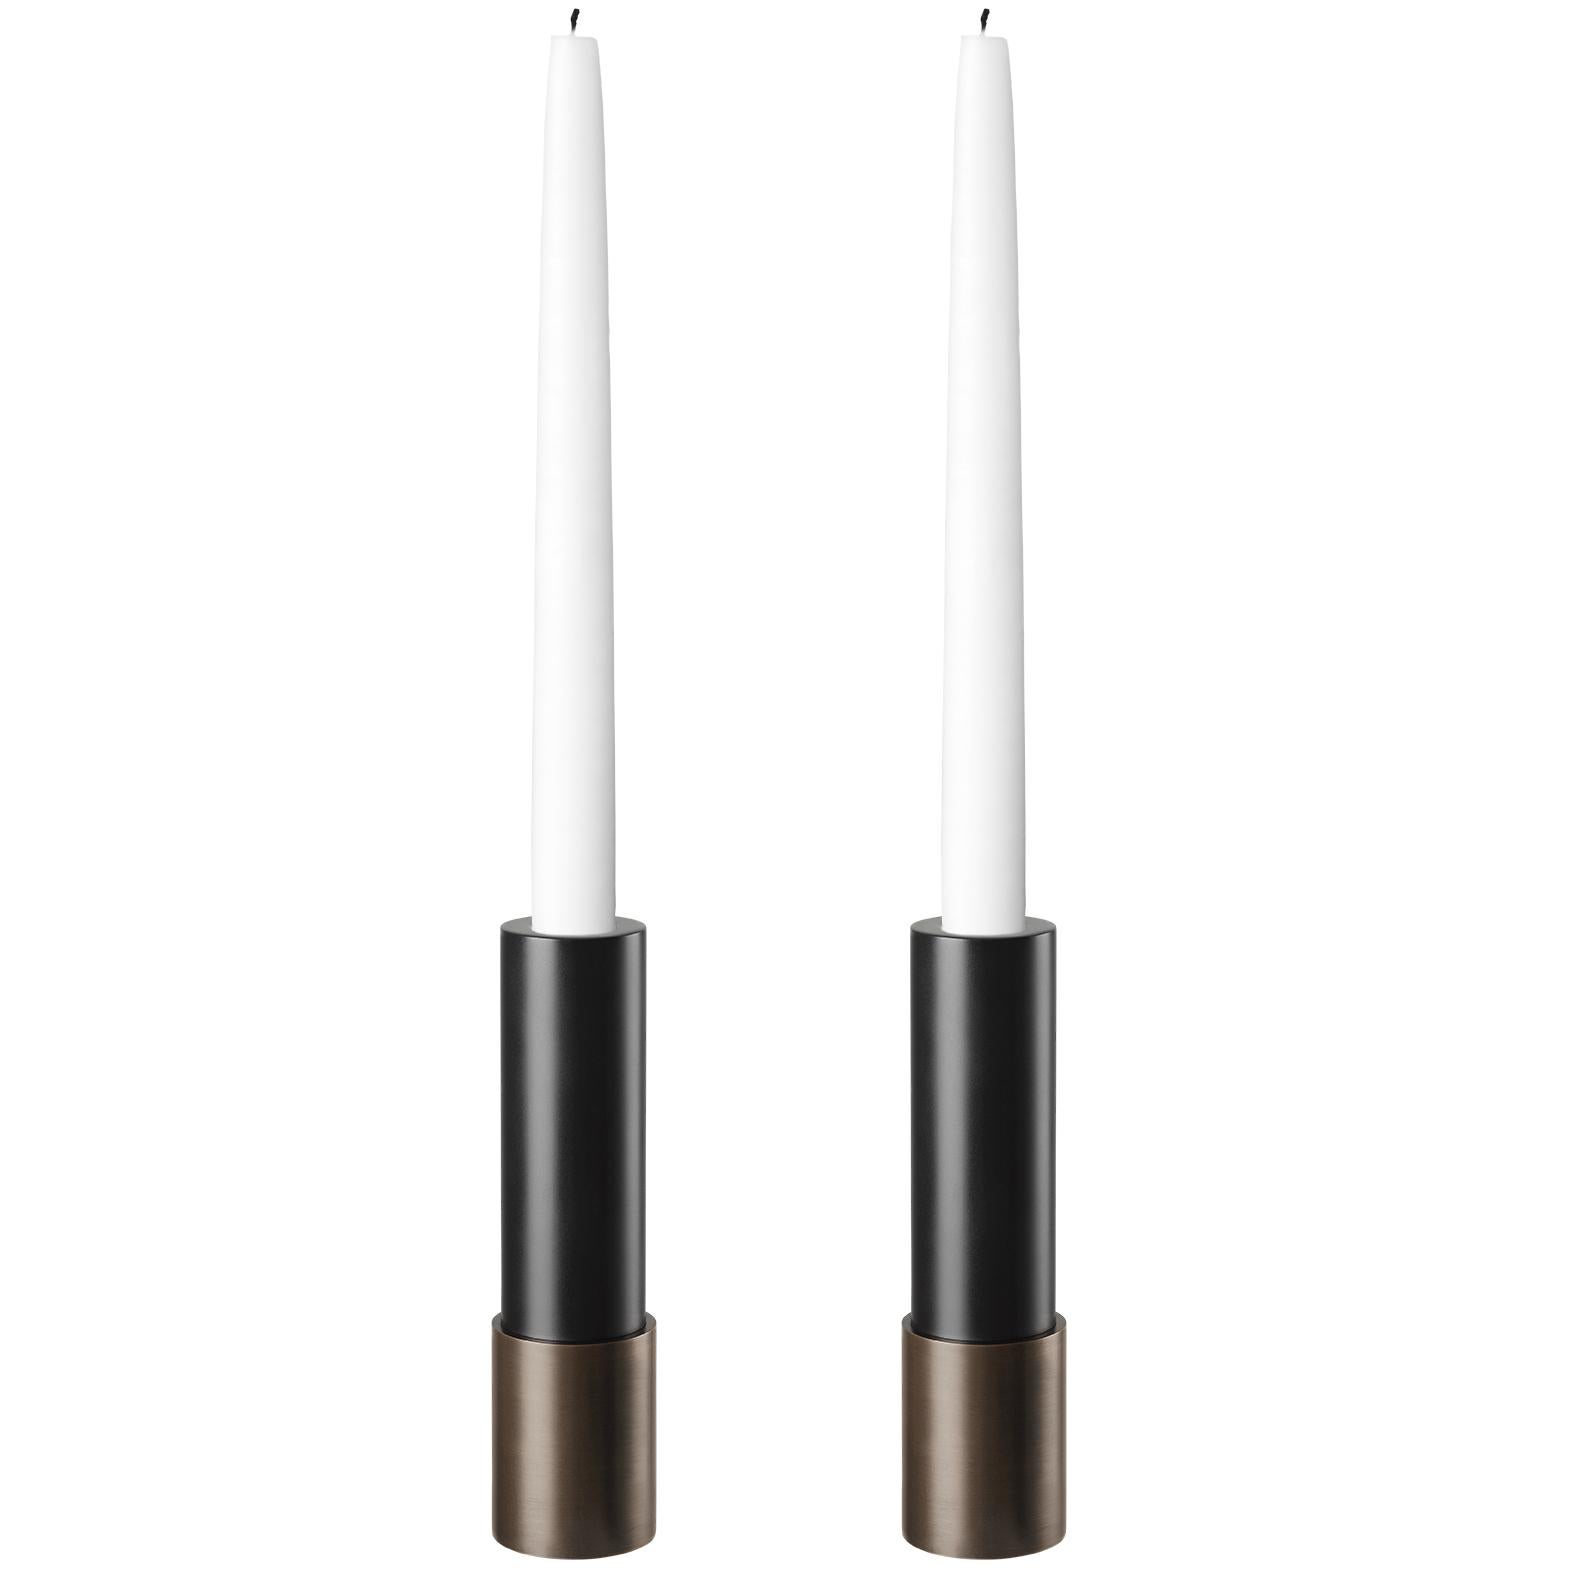 Pair of Candlesticks Model #12 by Space Copenhagen for Gubi For Sale 7